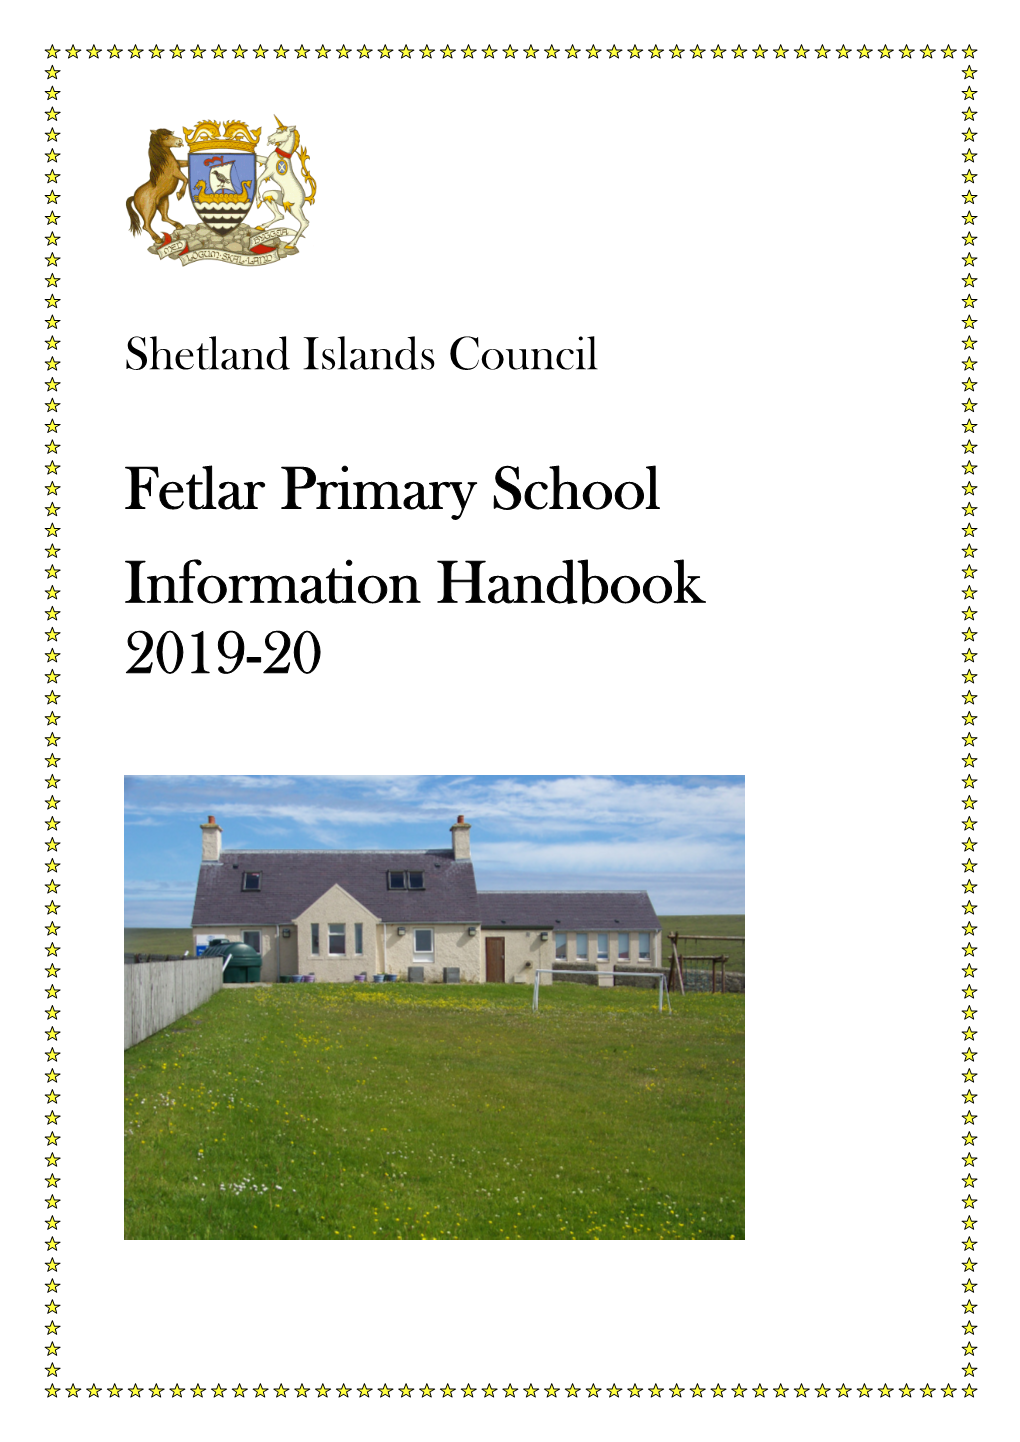 Fetlar Primary School Information Handbook 2019-20